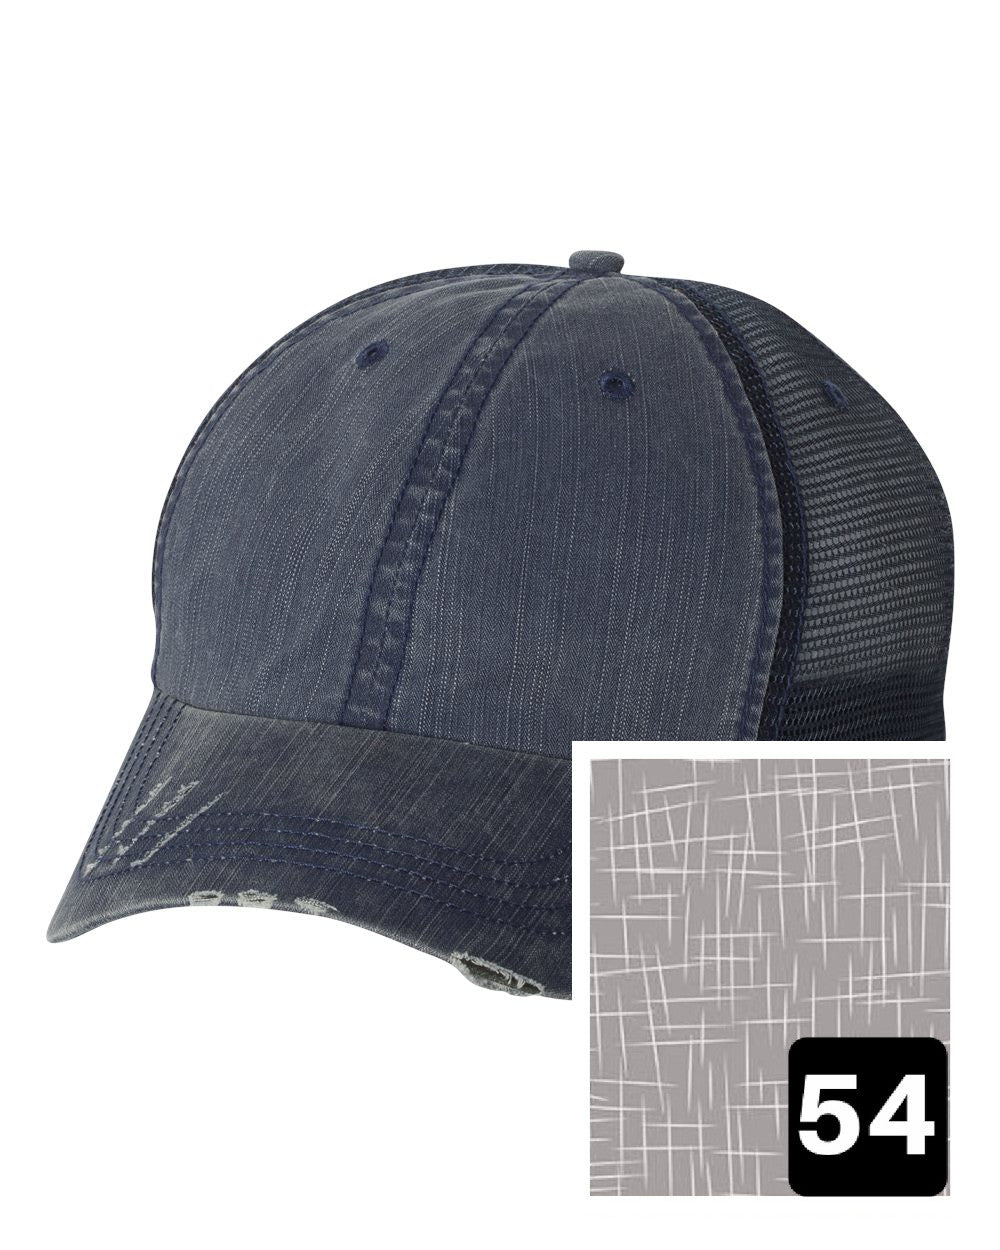 Washington Hat | Navy Distressed Trucker Cap | Many Fabric Choices